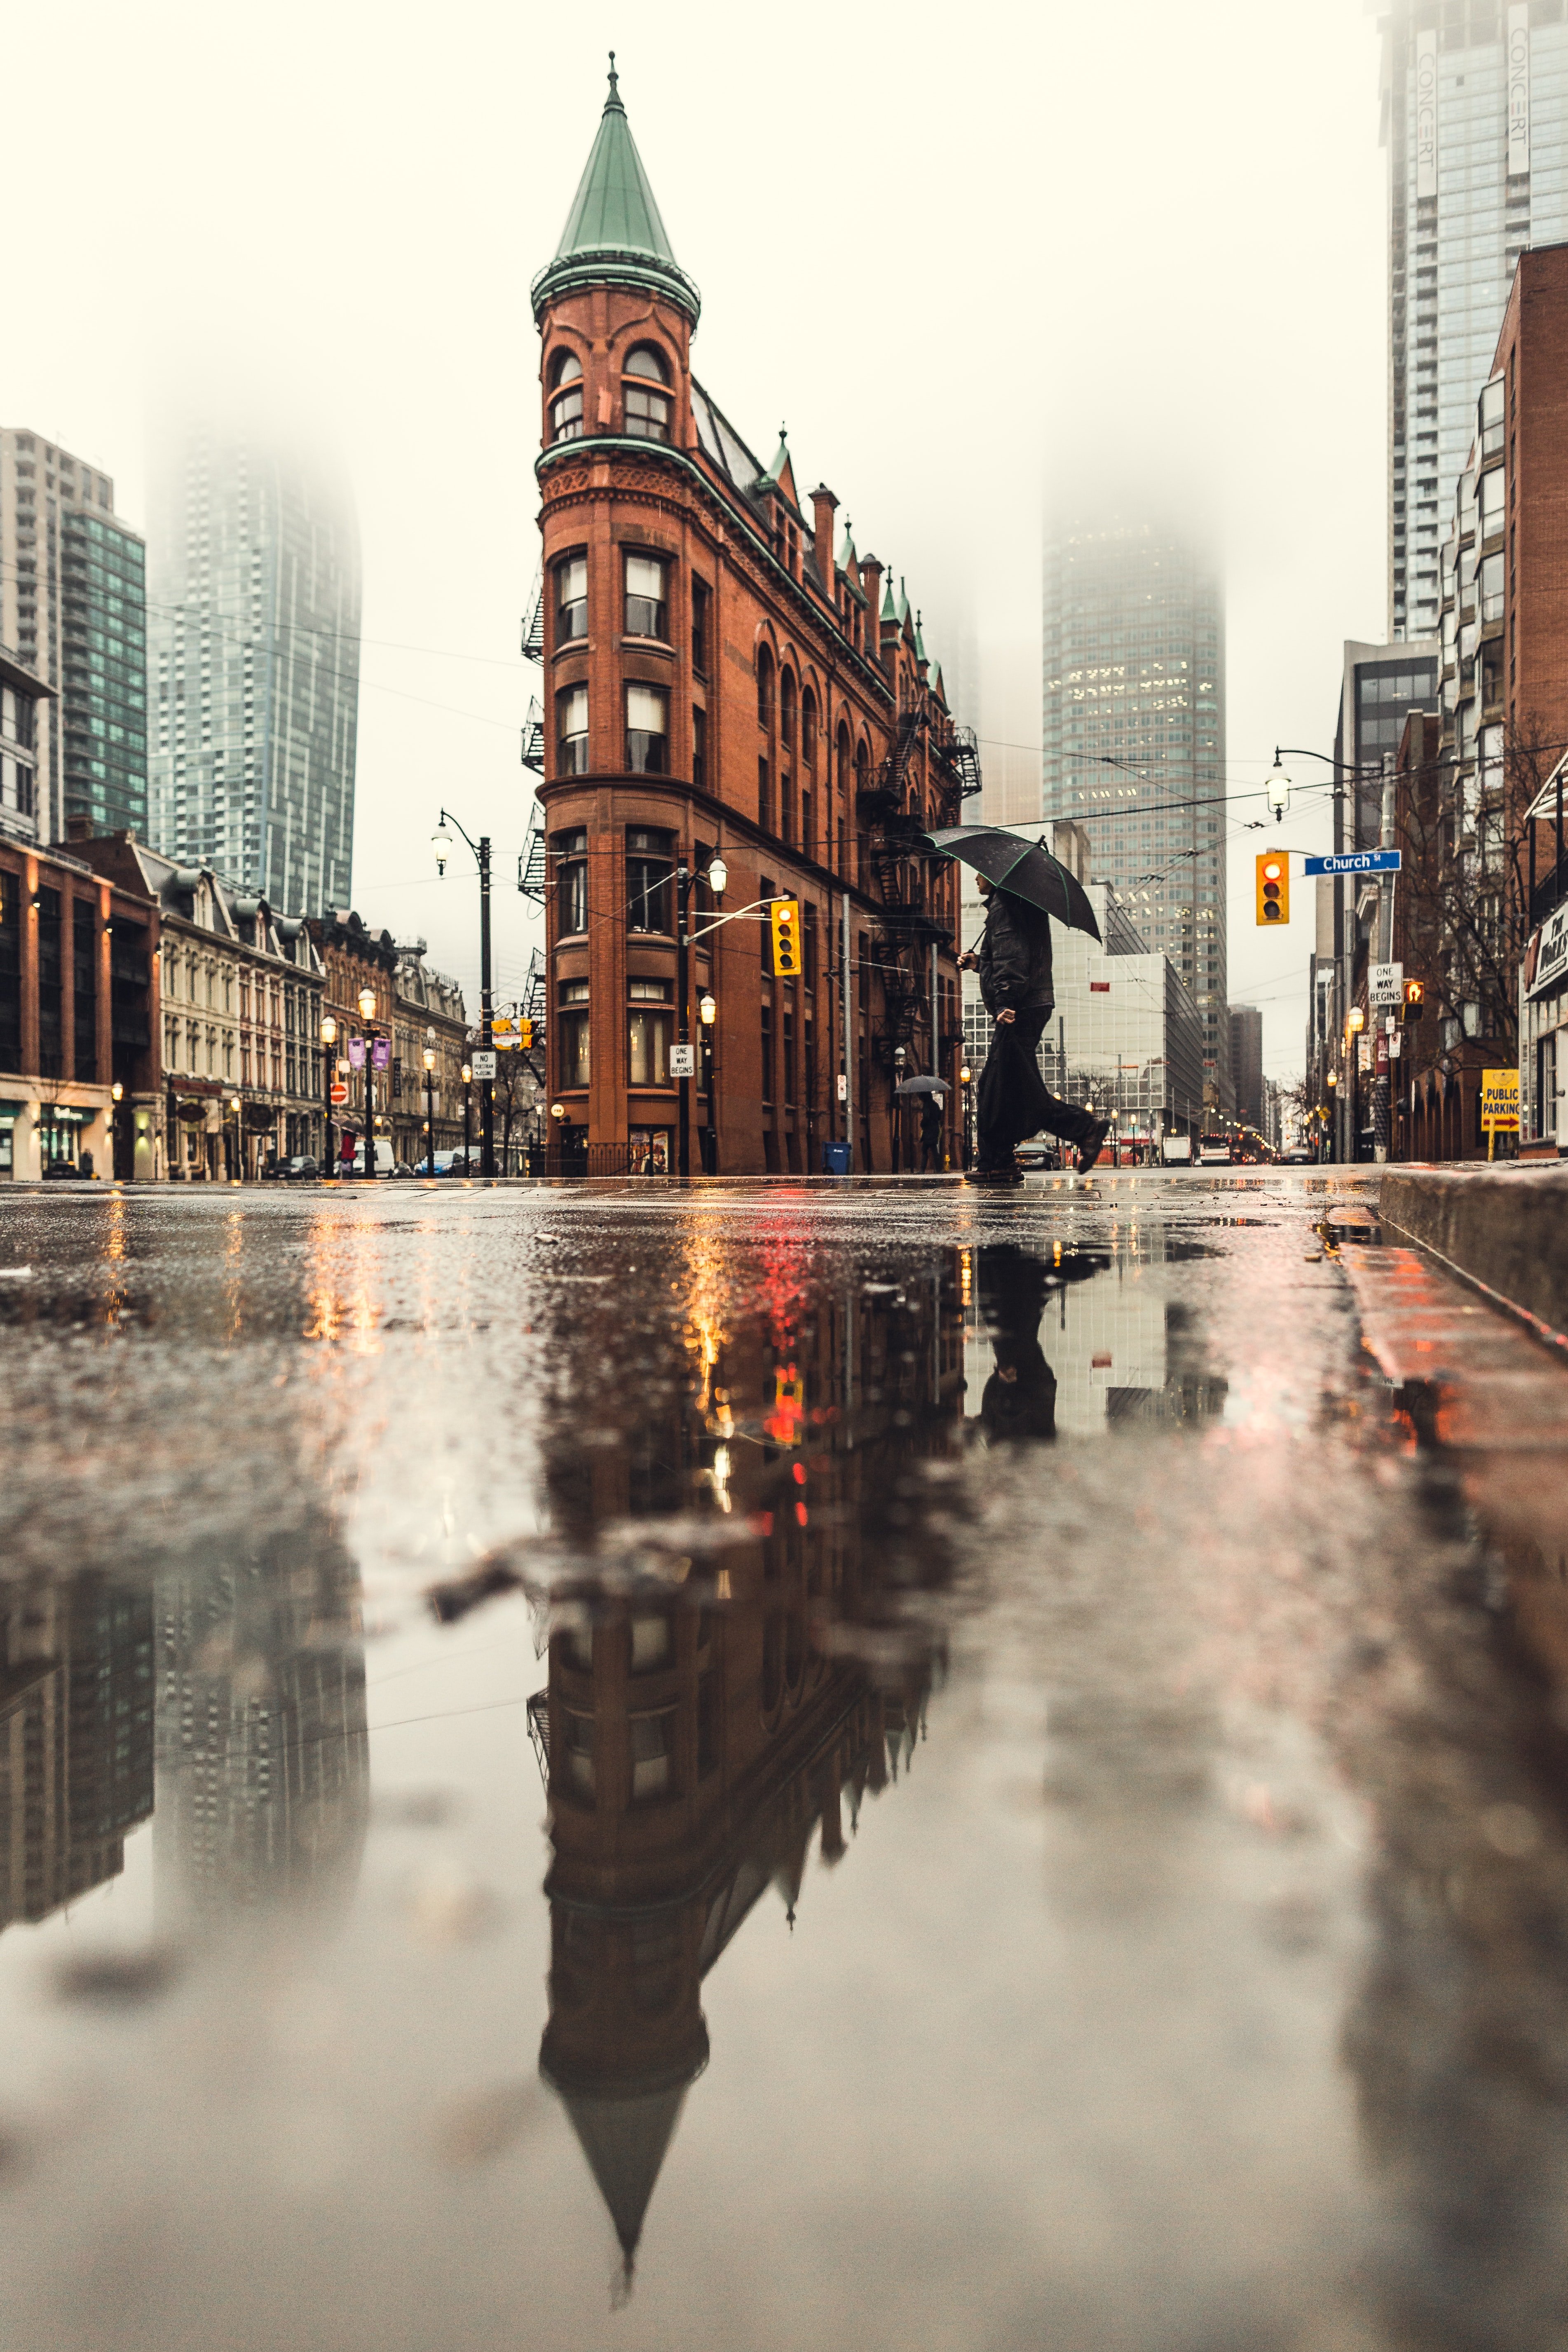 Man crossing the street in the rain | Source: Unsplash